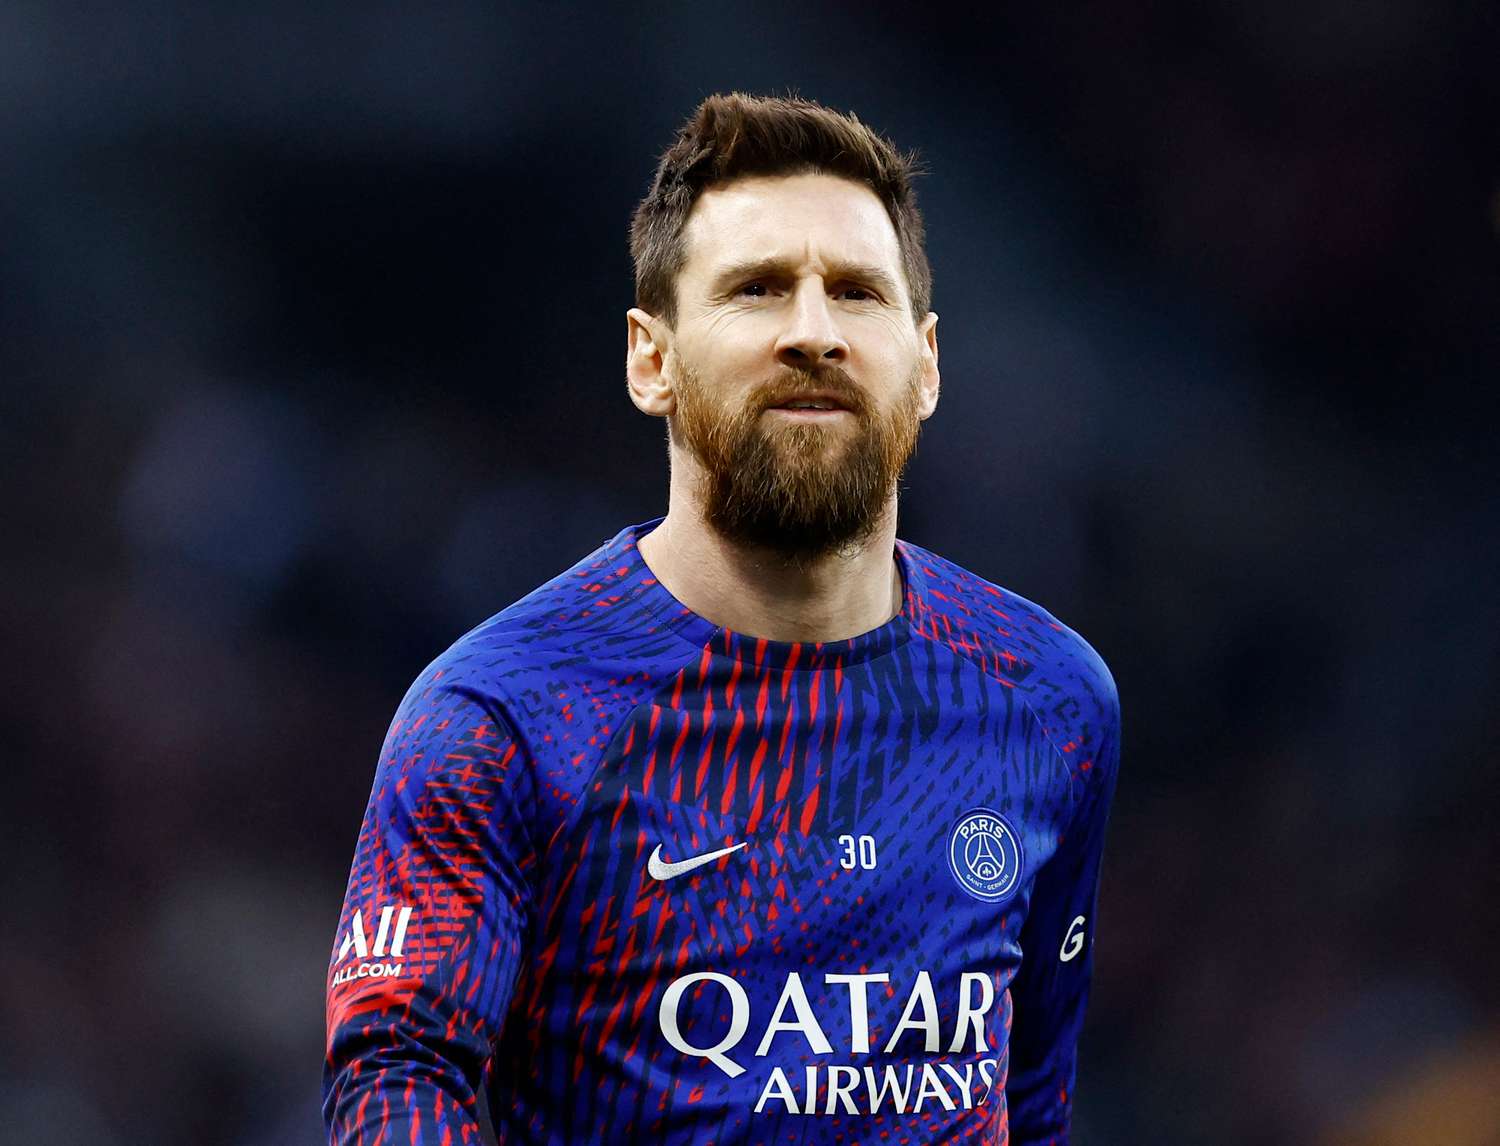 Messi volvió a entrenar y recibió una oferta de Arabia